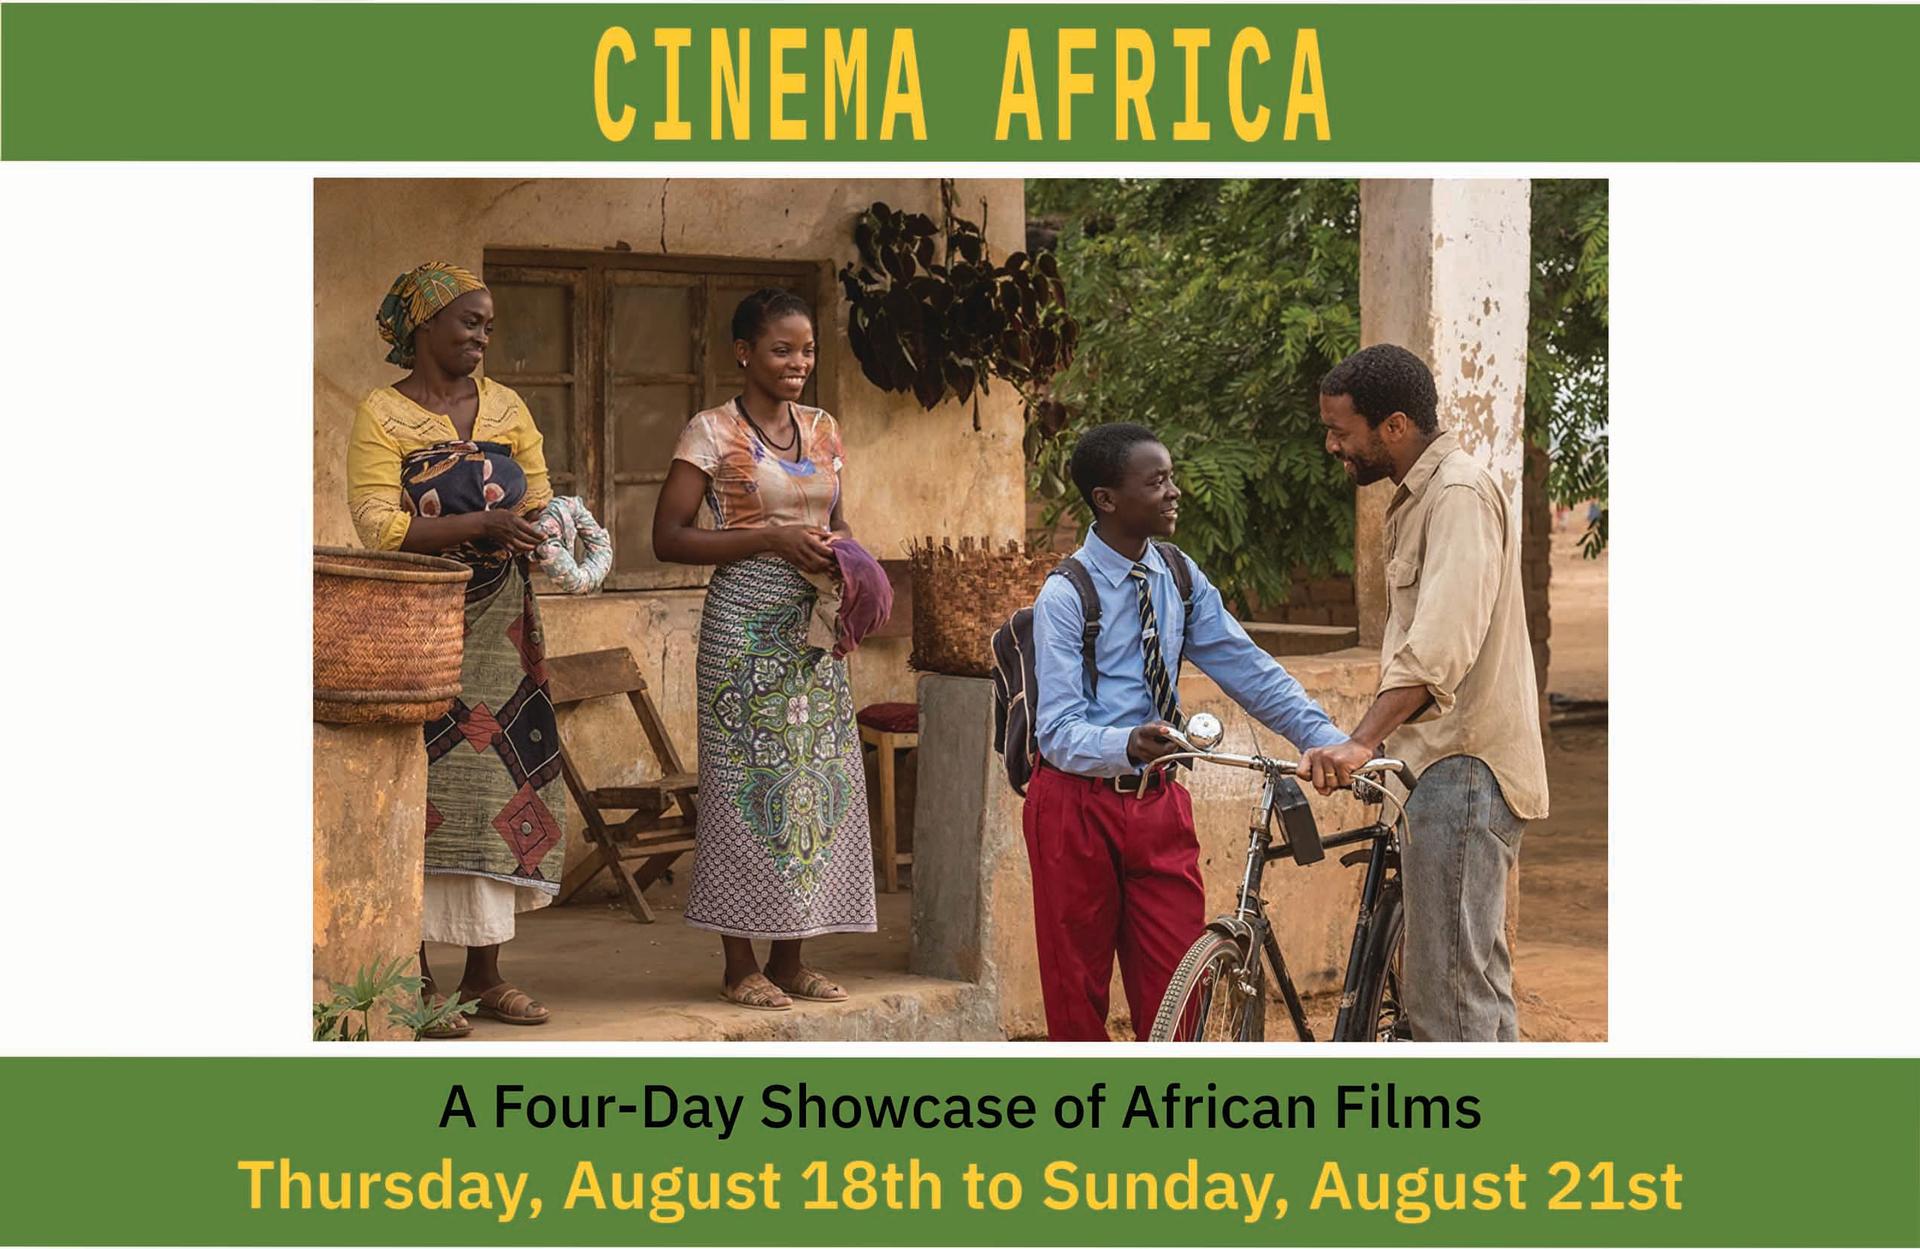 Cinema Africa